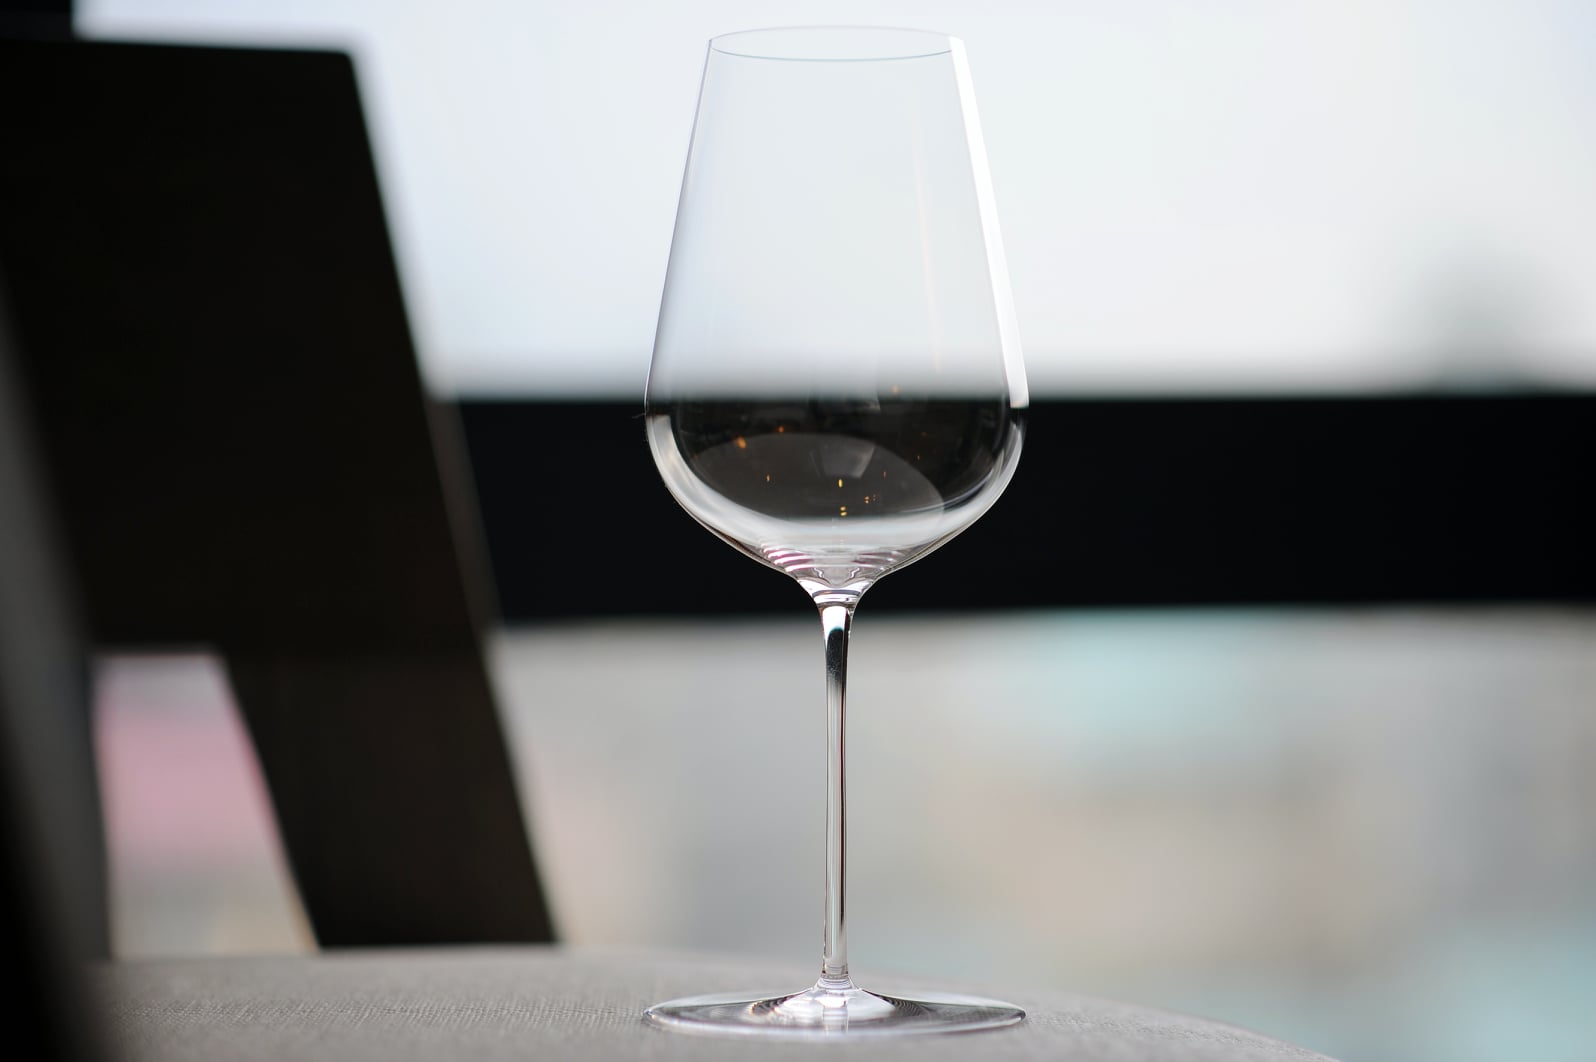  The 1 Wine glass 手工杯使用心得分享與 Zalto 通用杯比較